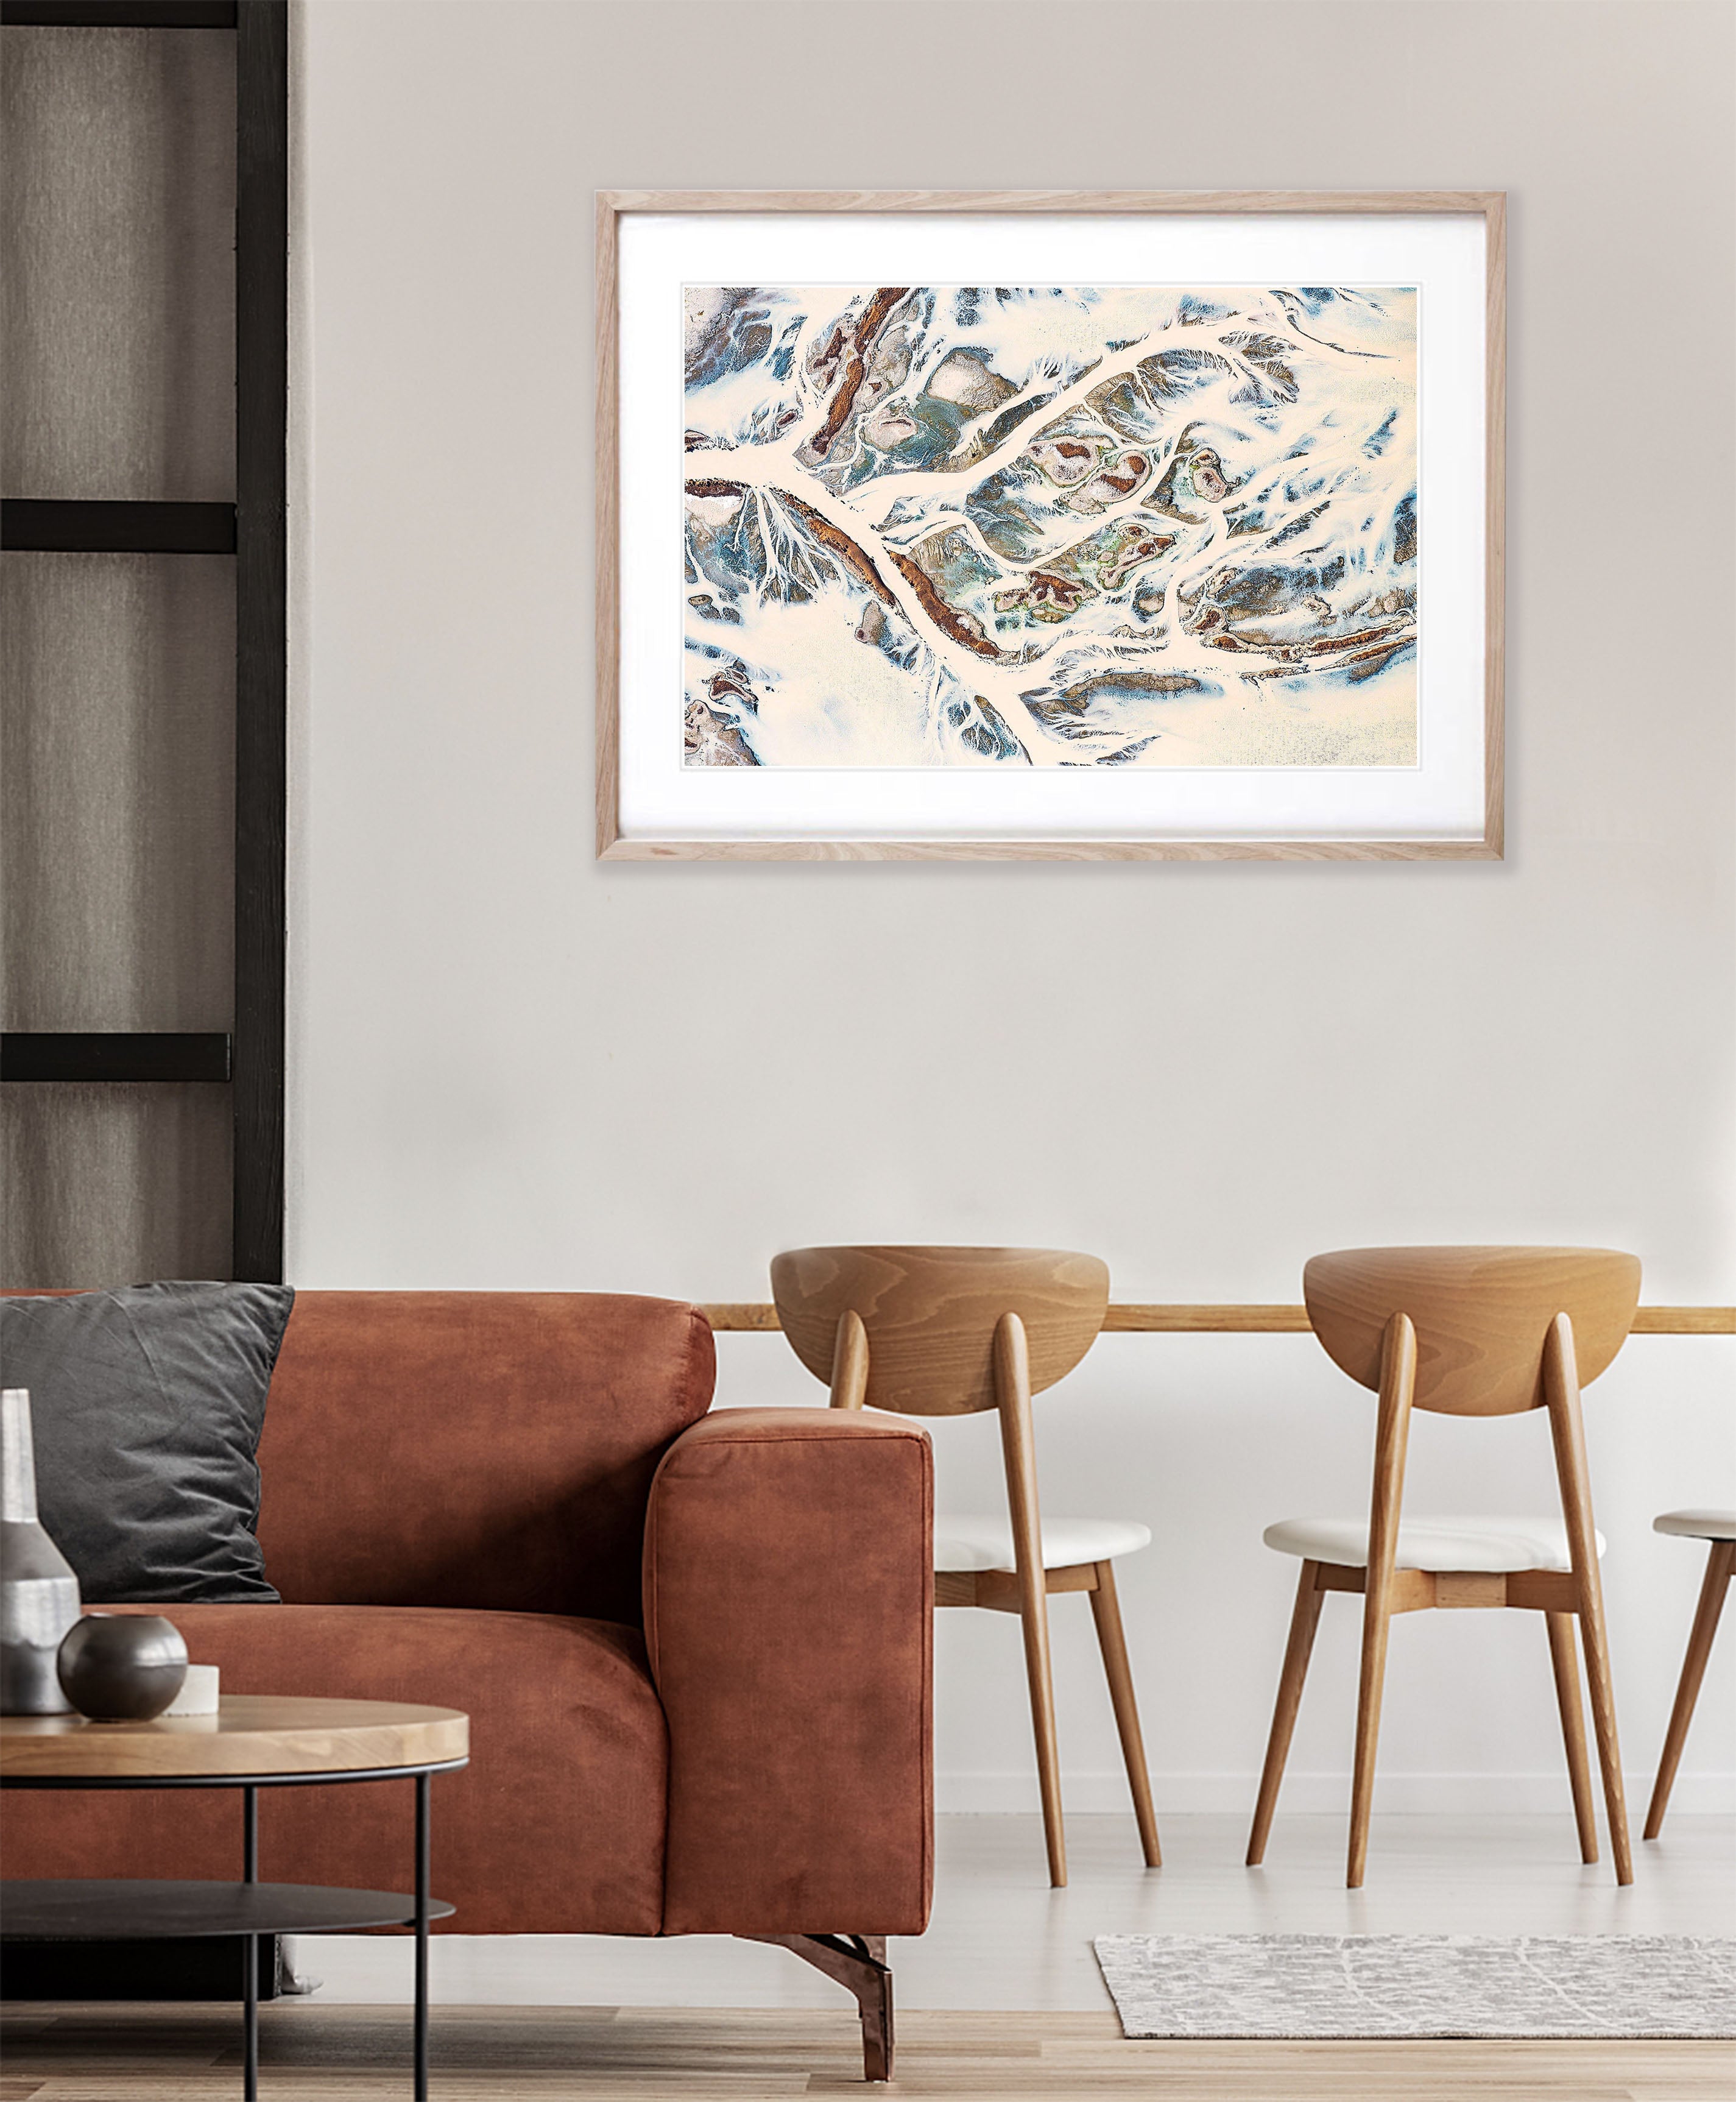 ARTWORK INSTOCK -  Desert Rains - Available 150 x 120cms Raw Oak Framed Print in the gallery TODAY!